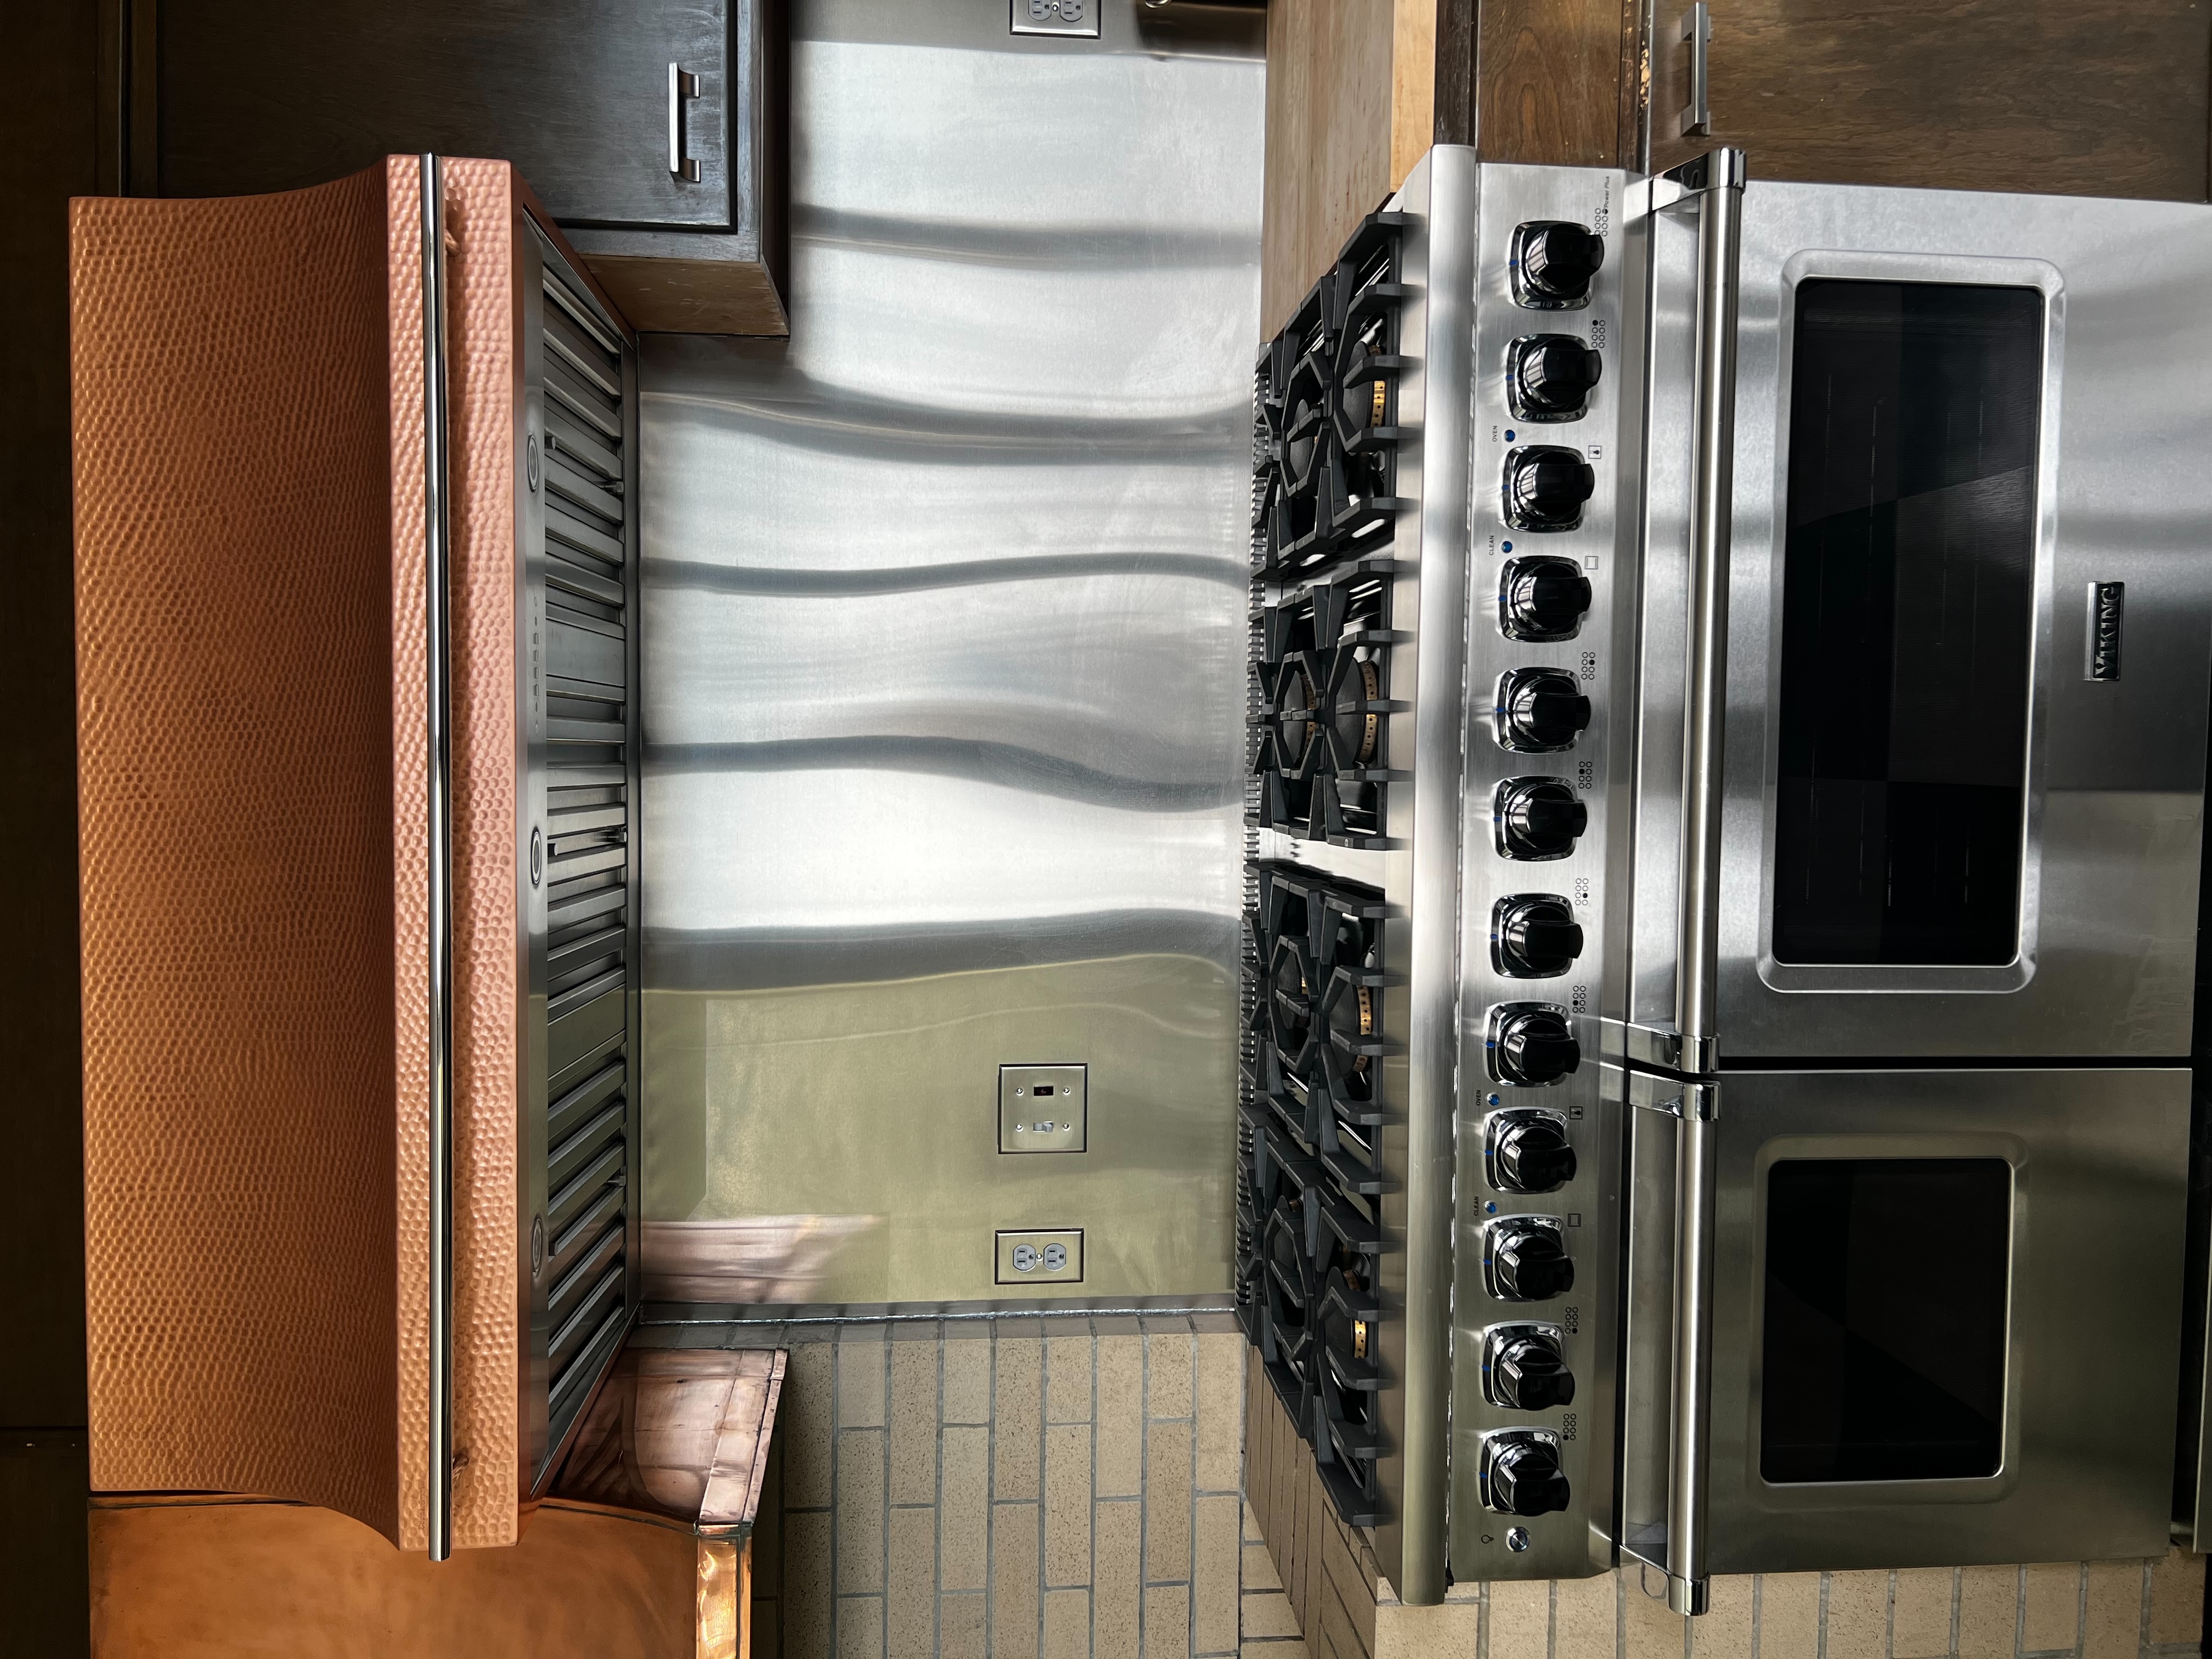 Range hood options,kitchen design idea,with coastal kitchen projects,warm brown kitchen cabinets, elegant stone kitchen countertops, sleek metal backsplash